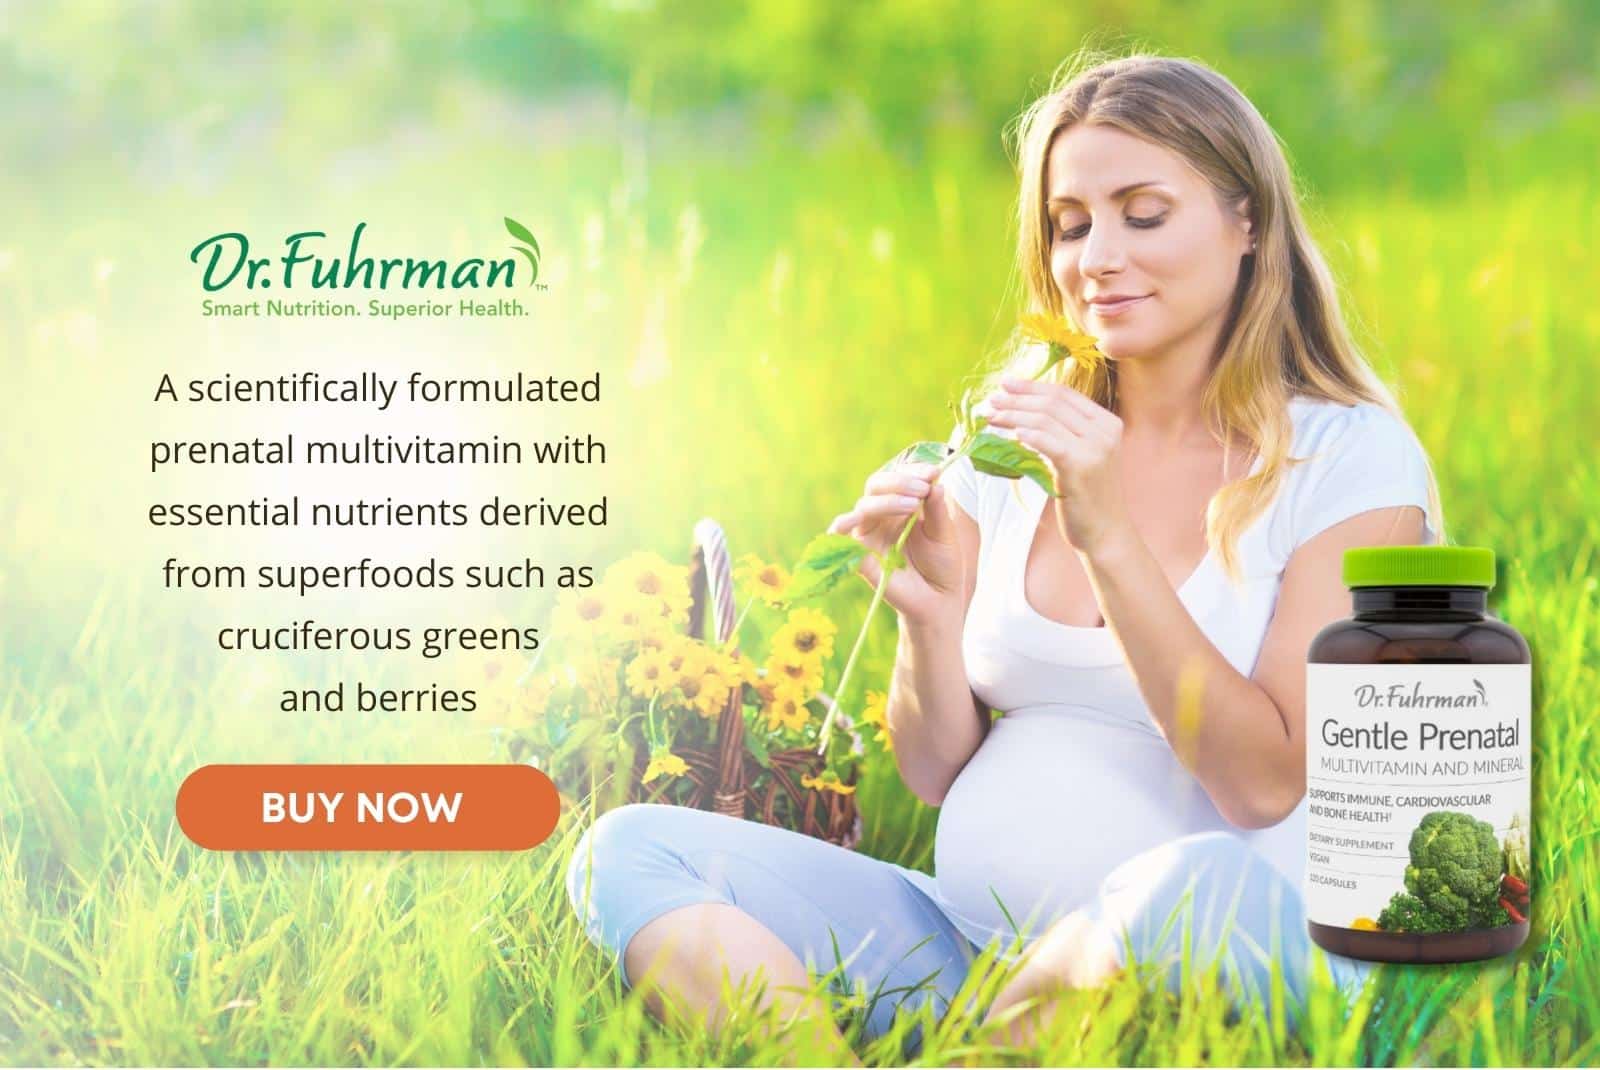 Click here to get Dr. Fuhrman's Prenatal supplement